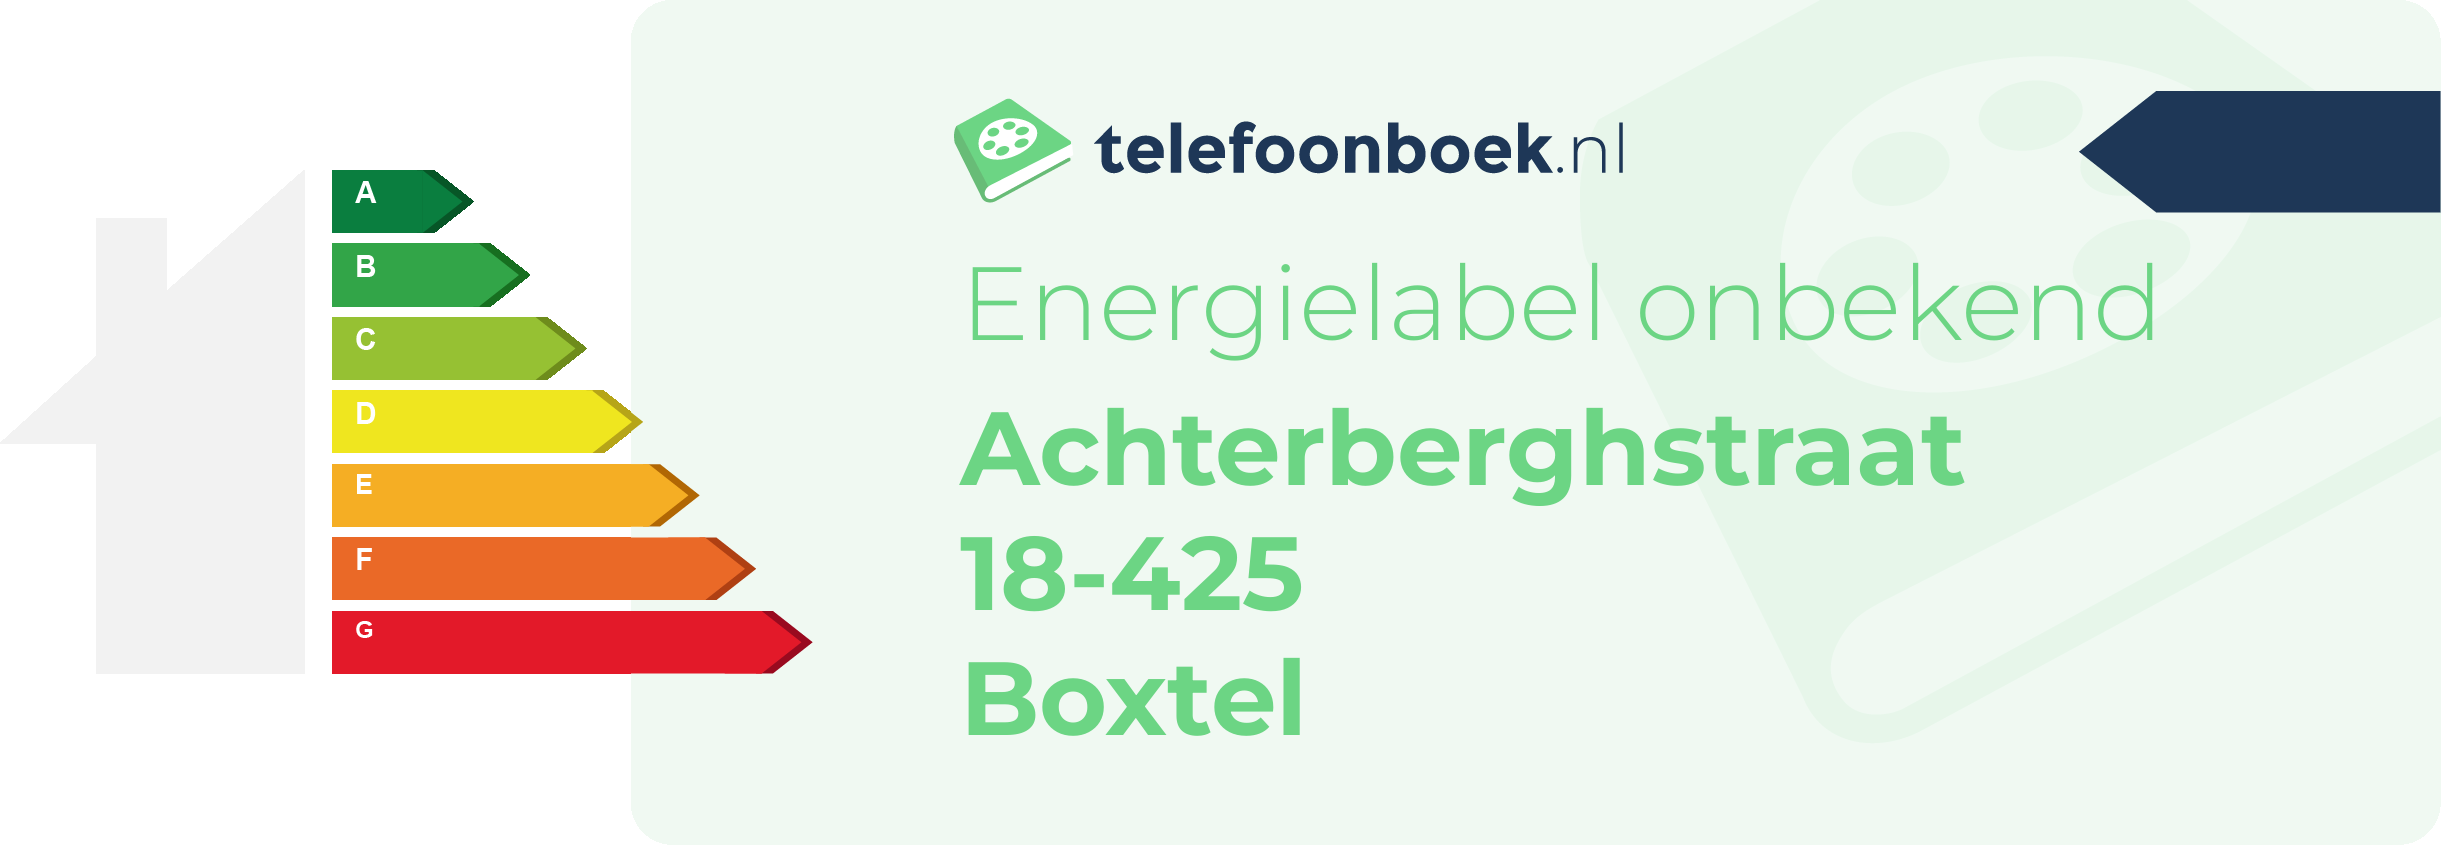 Energielabel Achterberghstraat 18-425 Boxtel